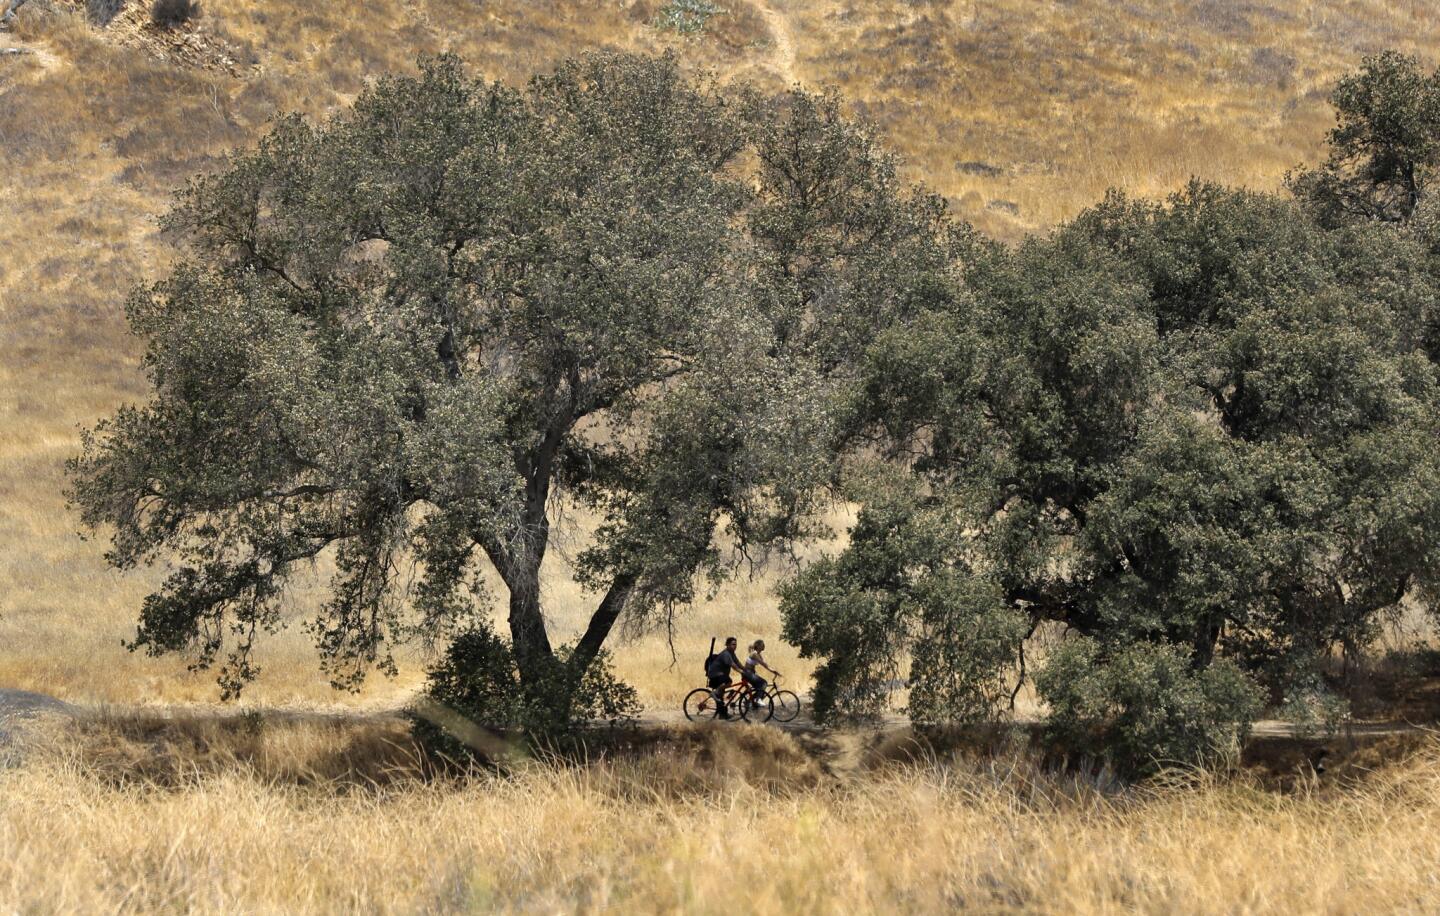 People ride their bikes during a visit to Malibu Creek State Park in Calabasas.